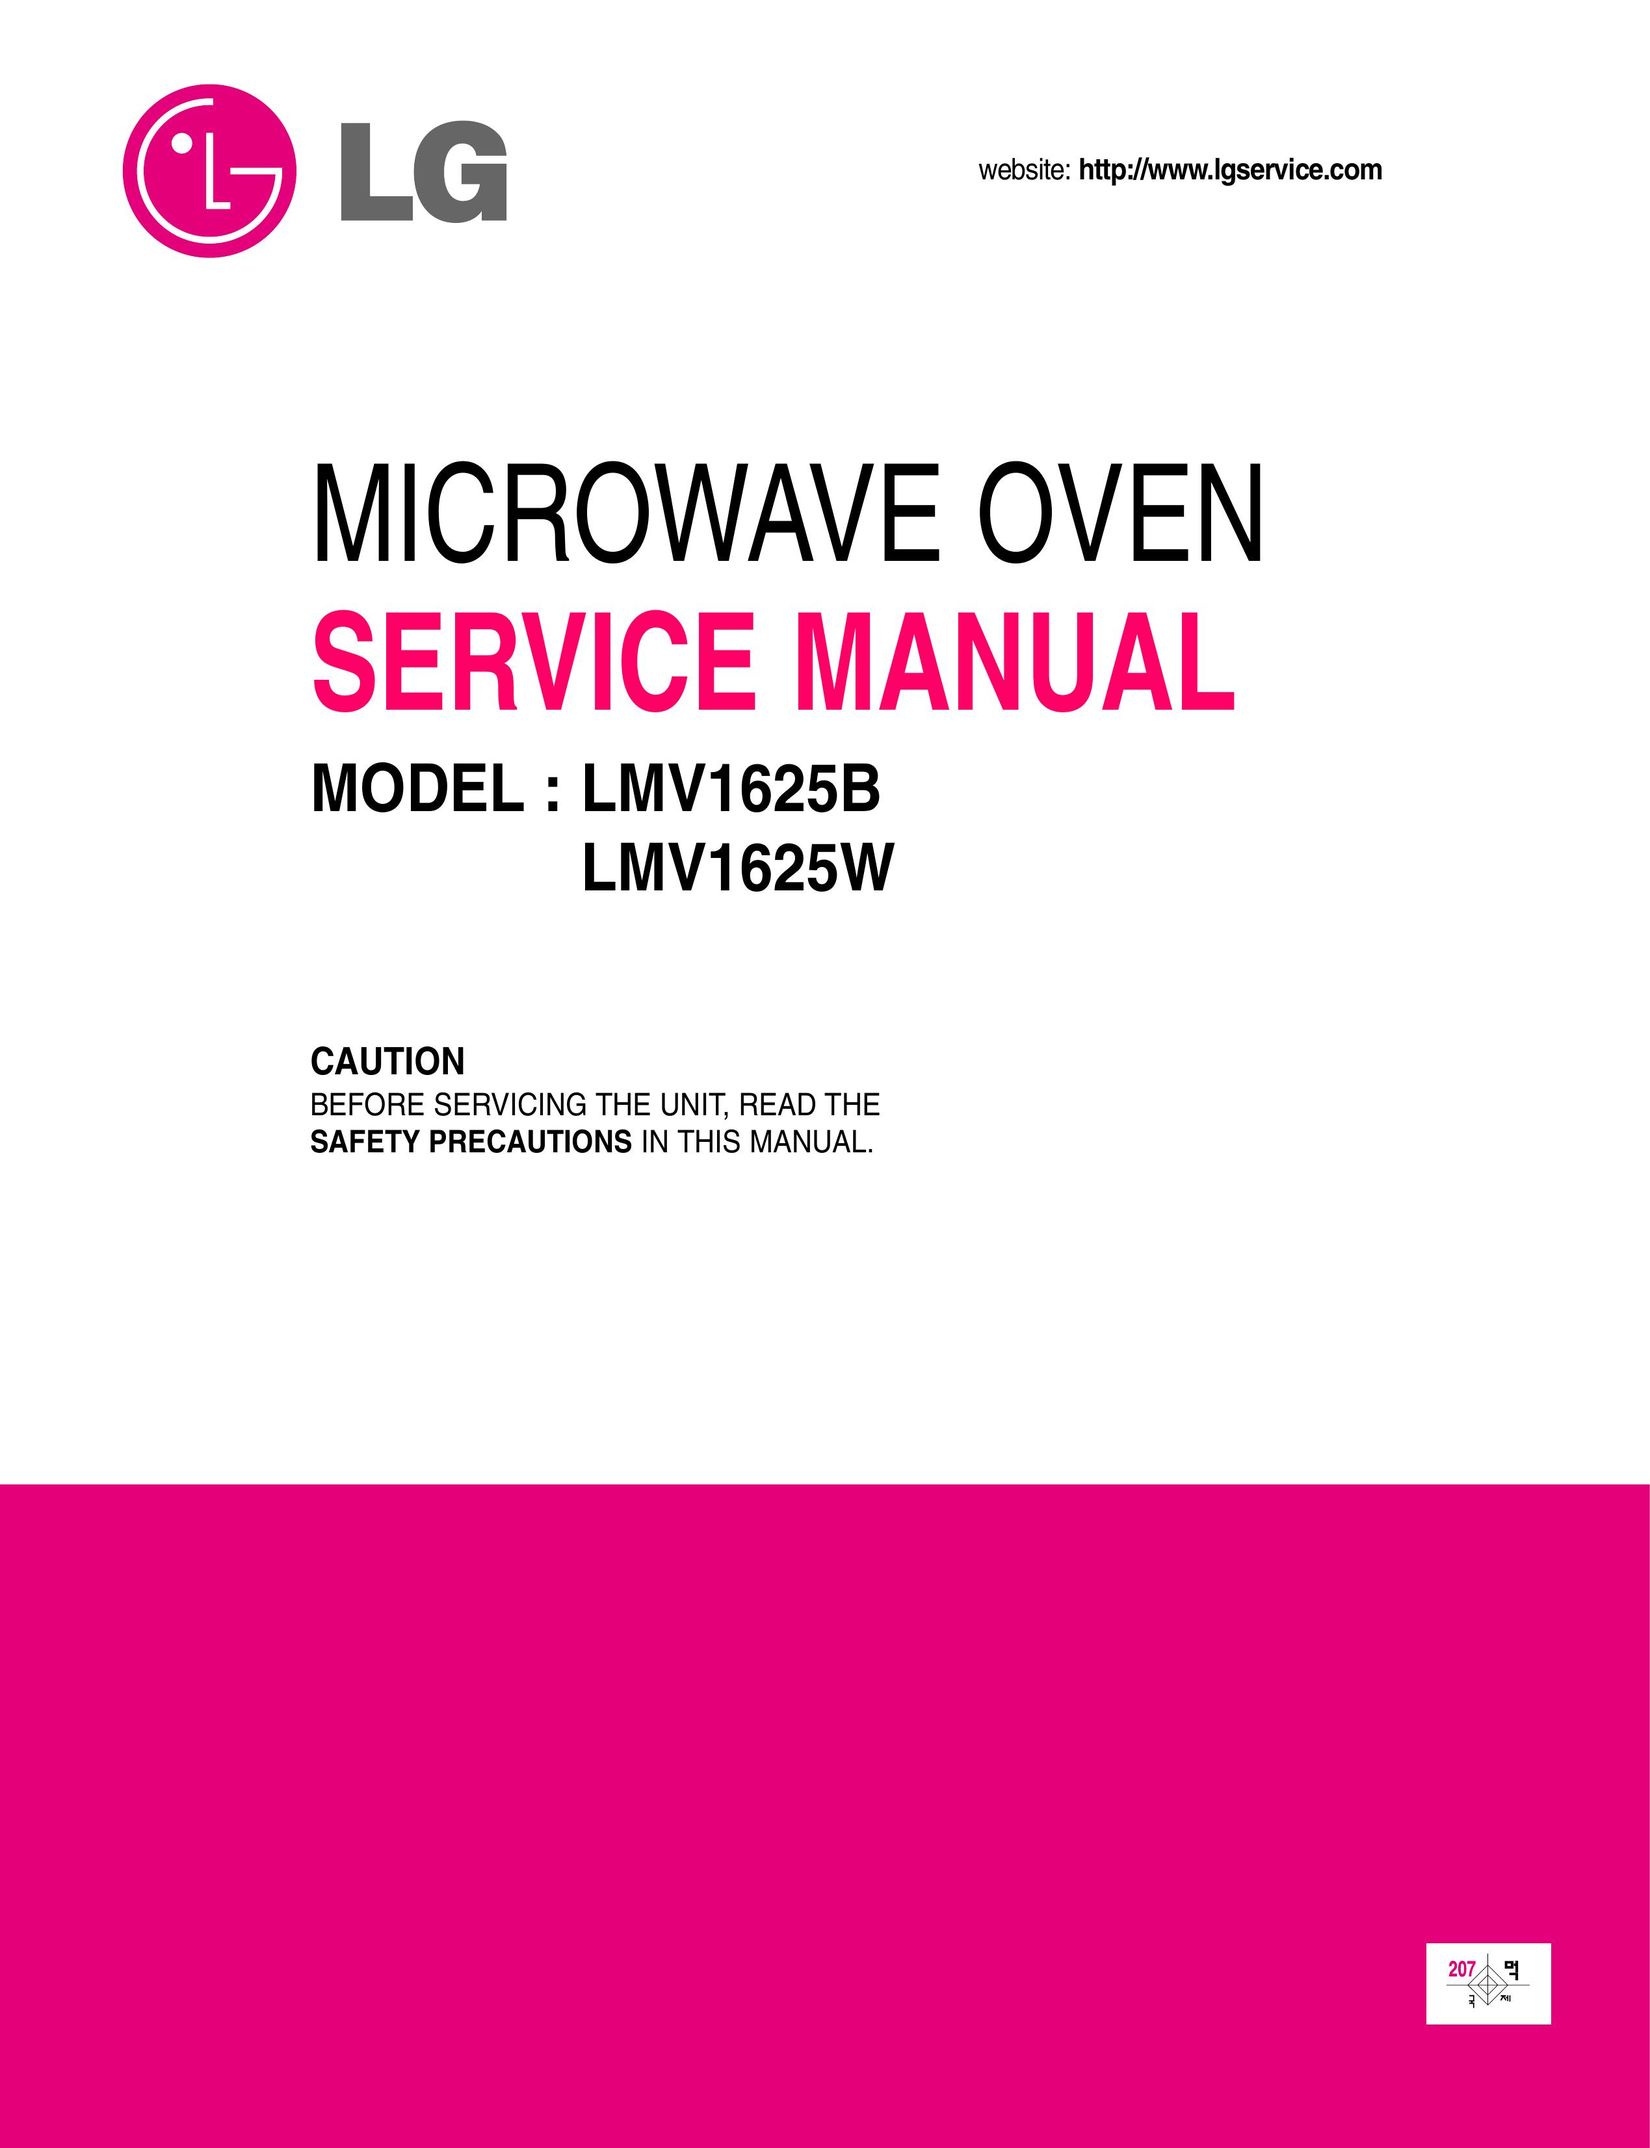 LG Electronics LMV1625W Microwave Oven User Manual